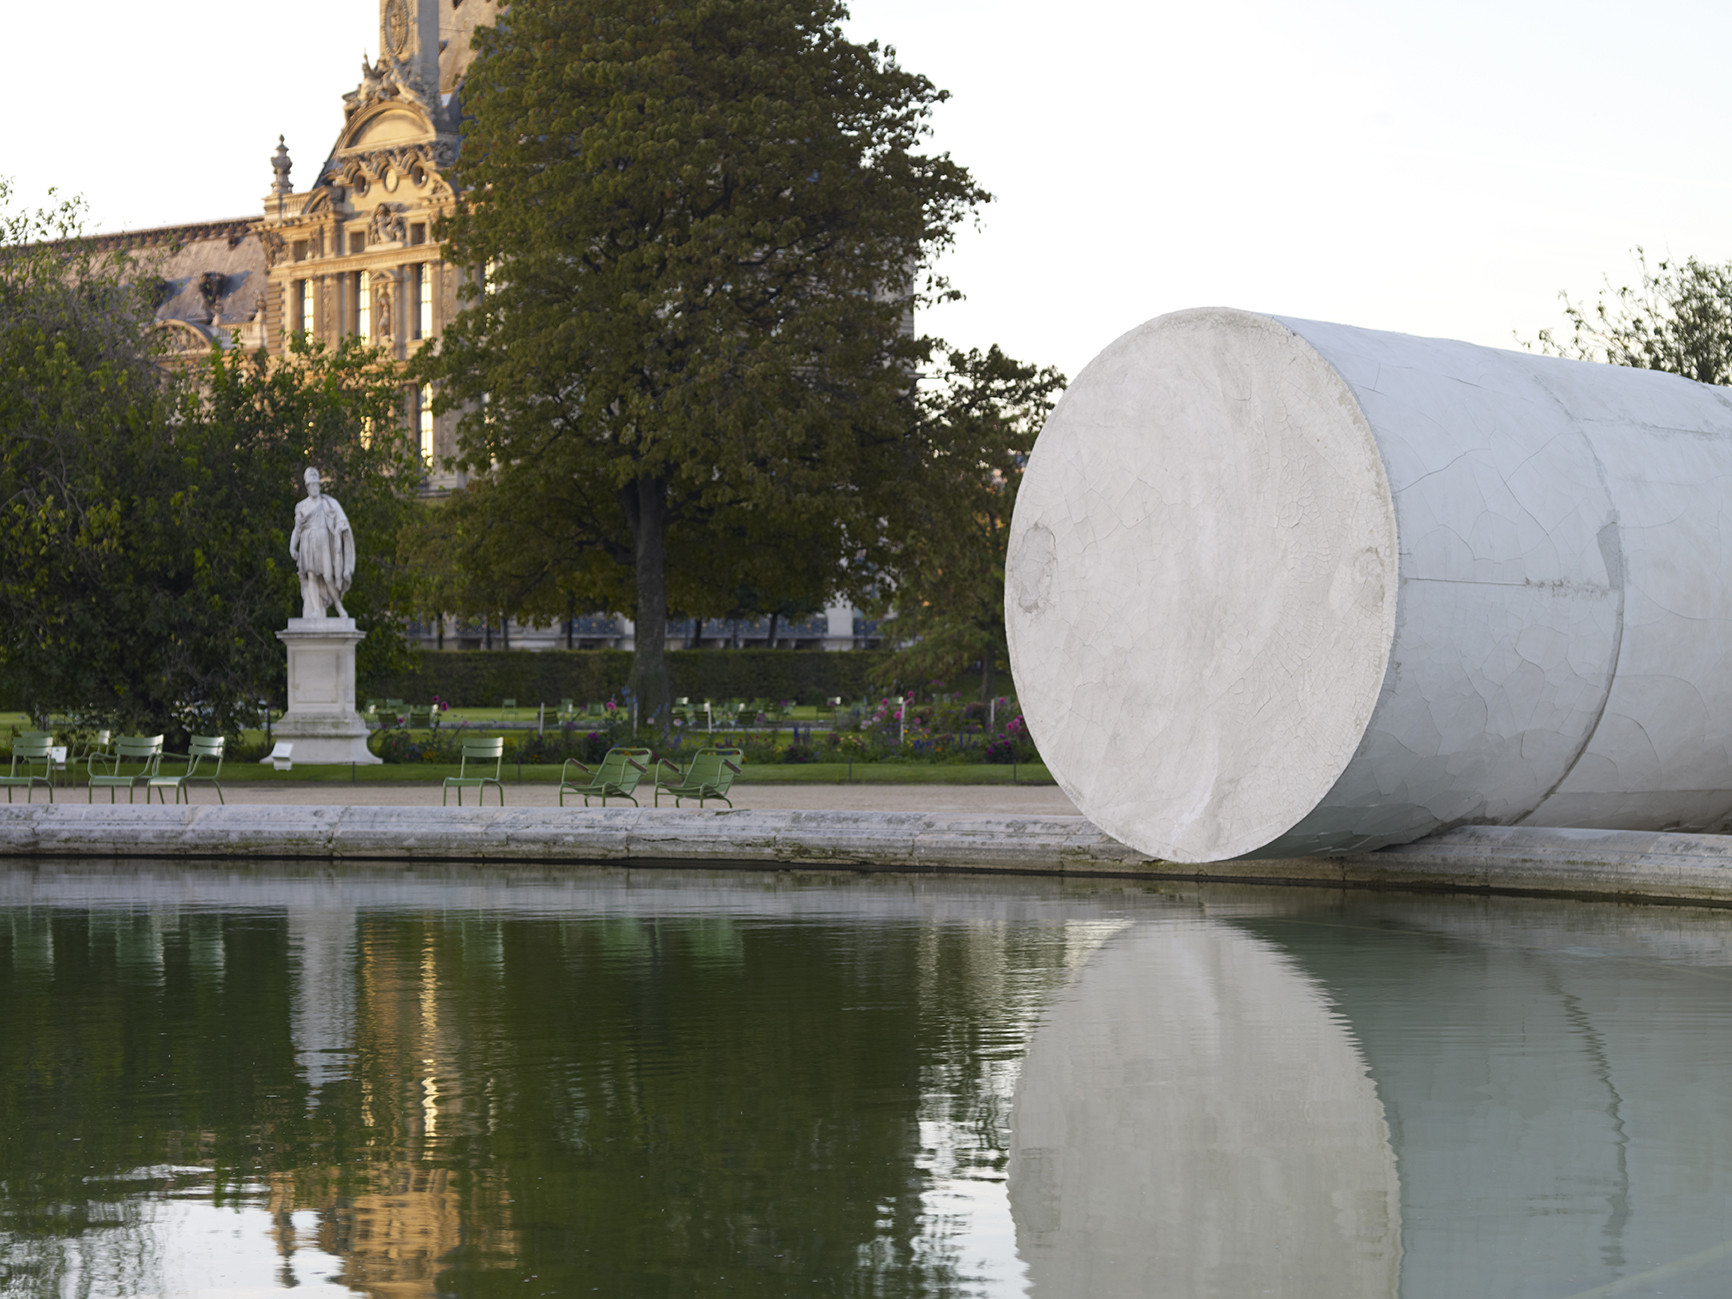 Vue de l’oeuvre de Adrian Villar Rojas “Poems for Earthlings”, Jardin des Tuileries, Paris.